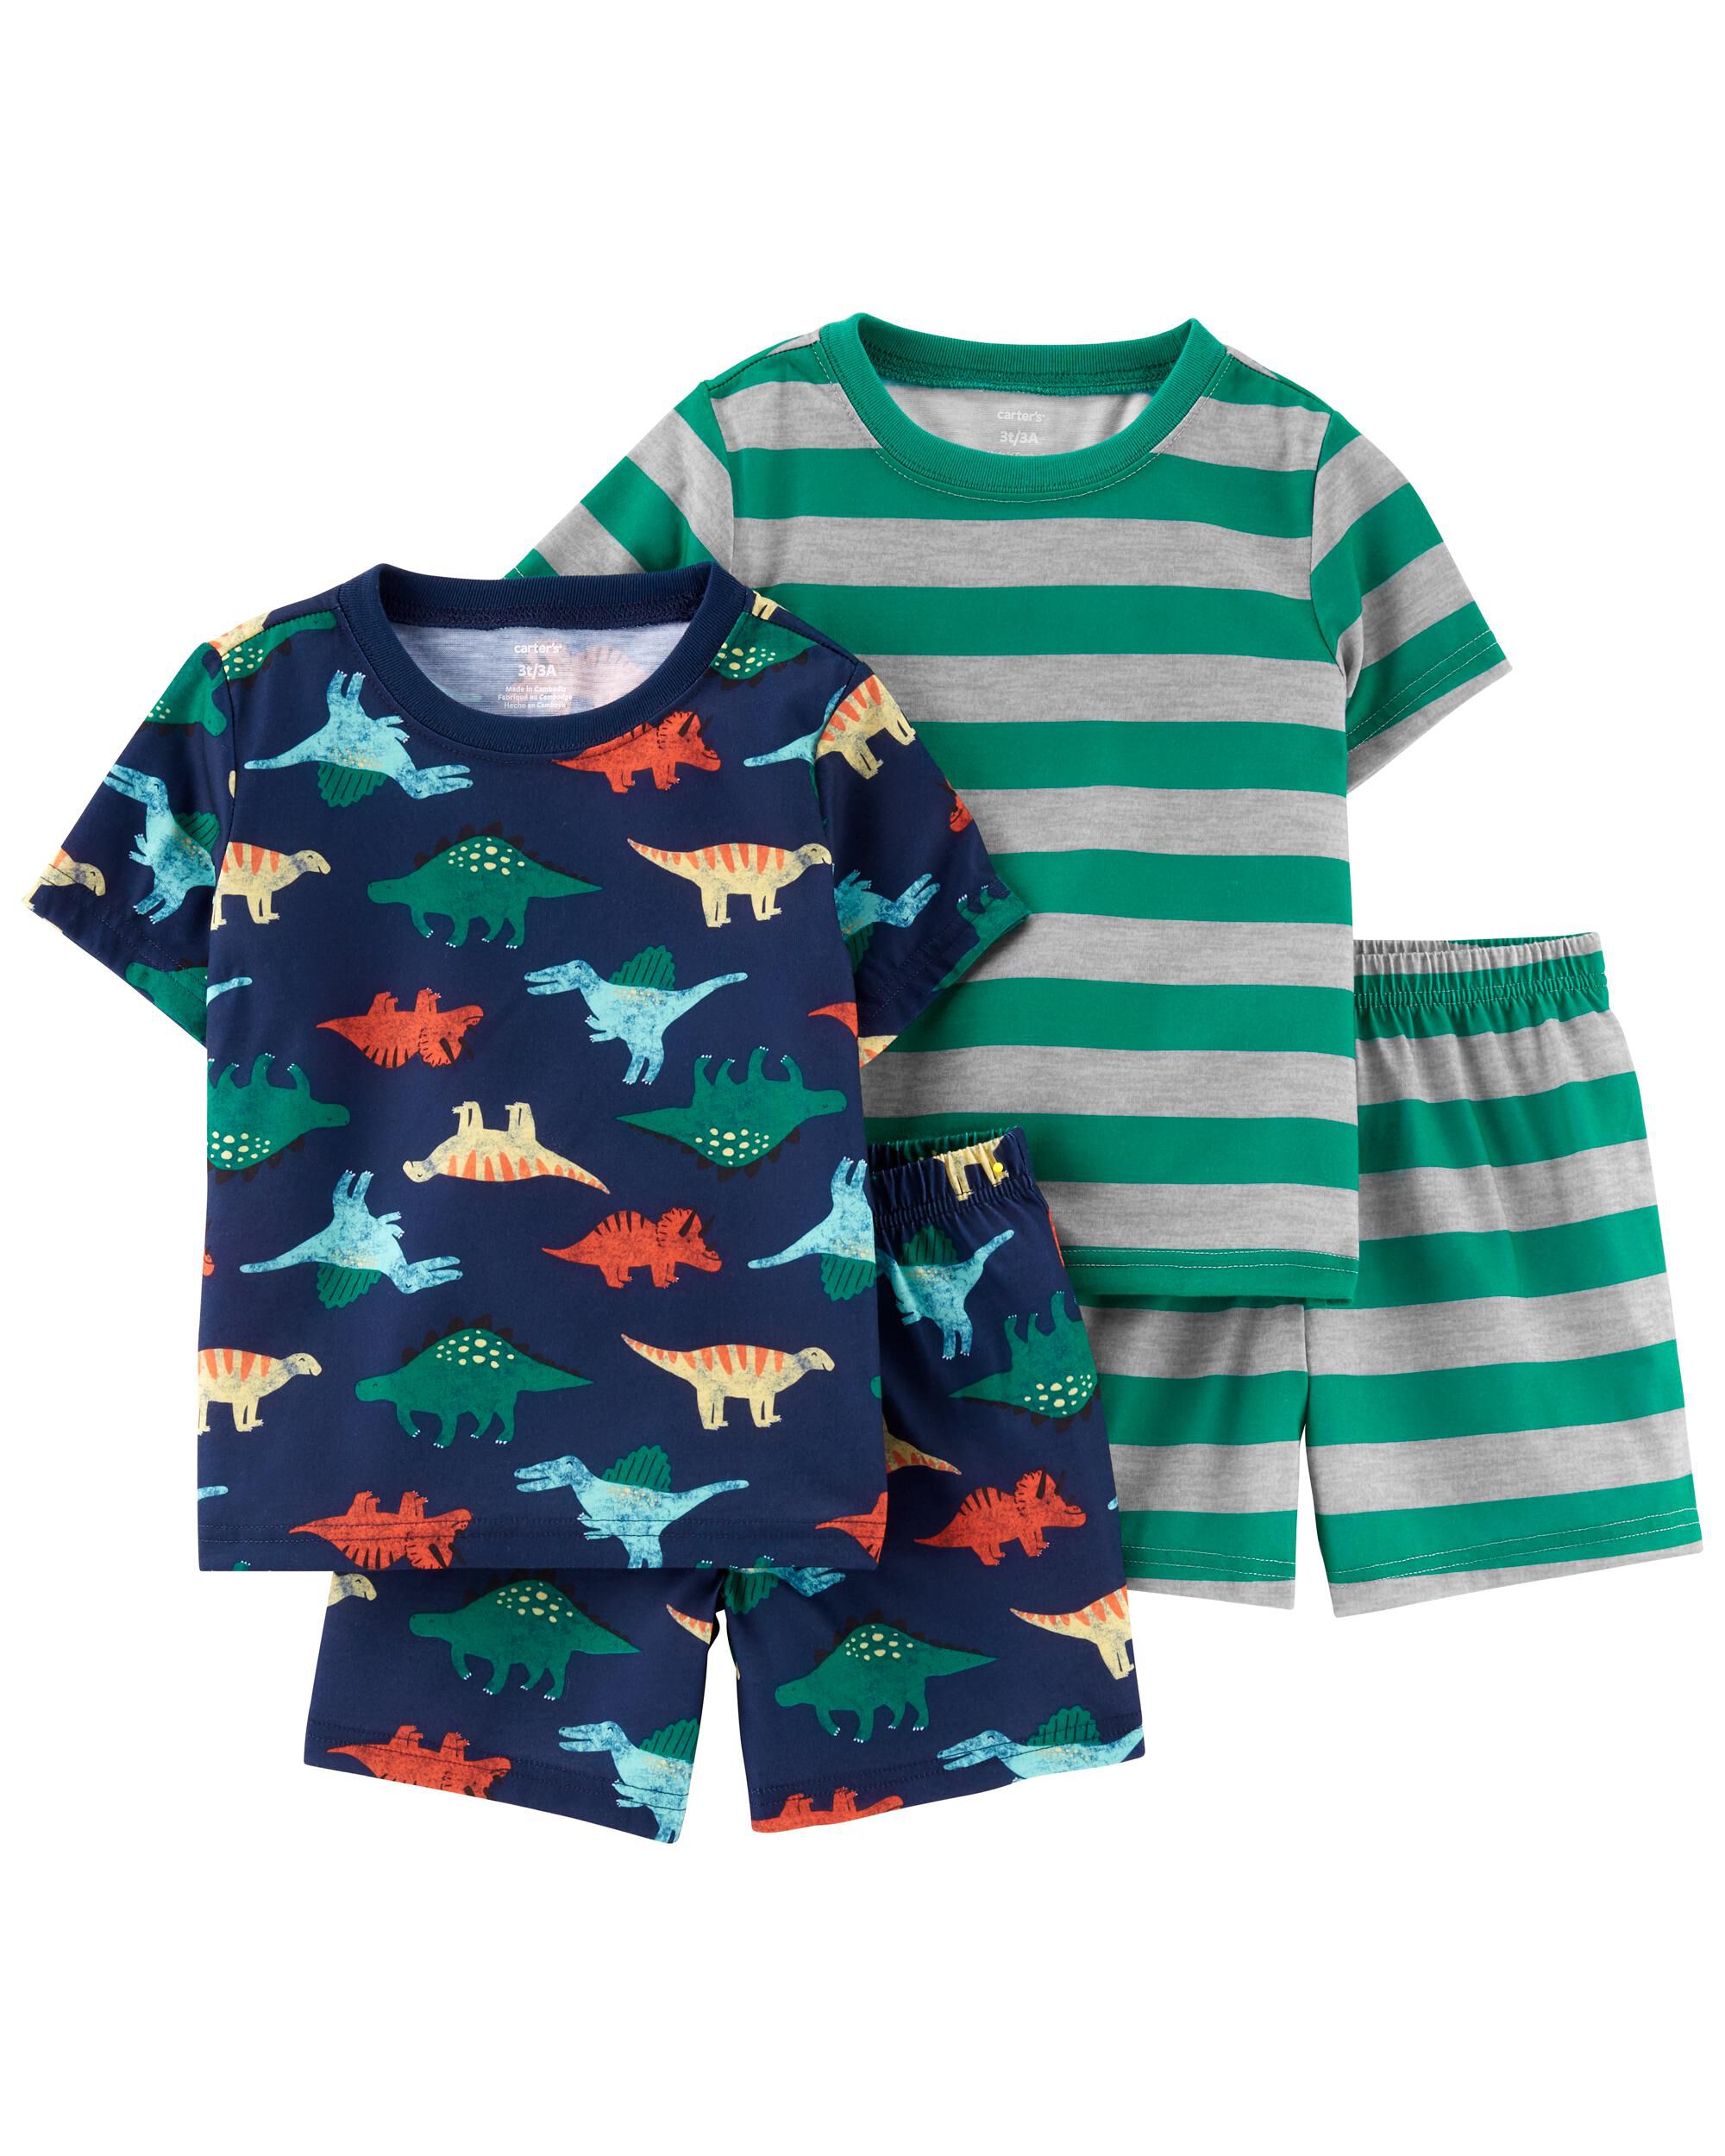 New Carter's Boys Shark Poly Pajama 3 pc Set Toddler many sizes 